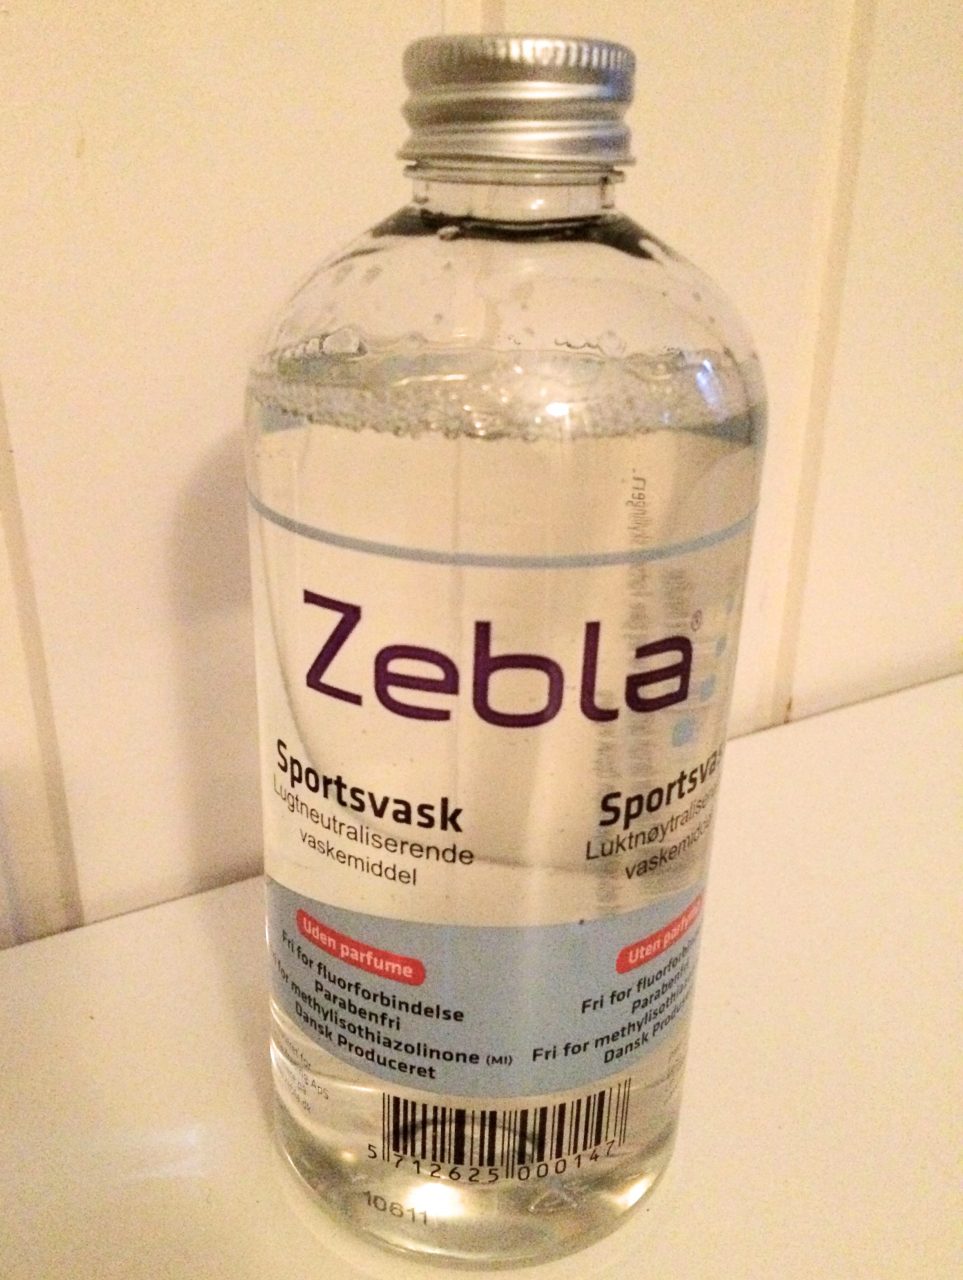 Sånn ser en flaske med Zebla Sportsvask ut.